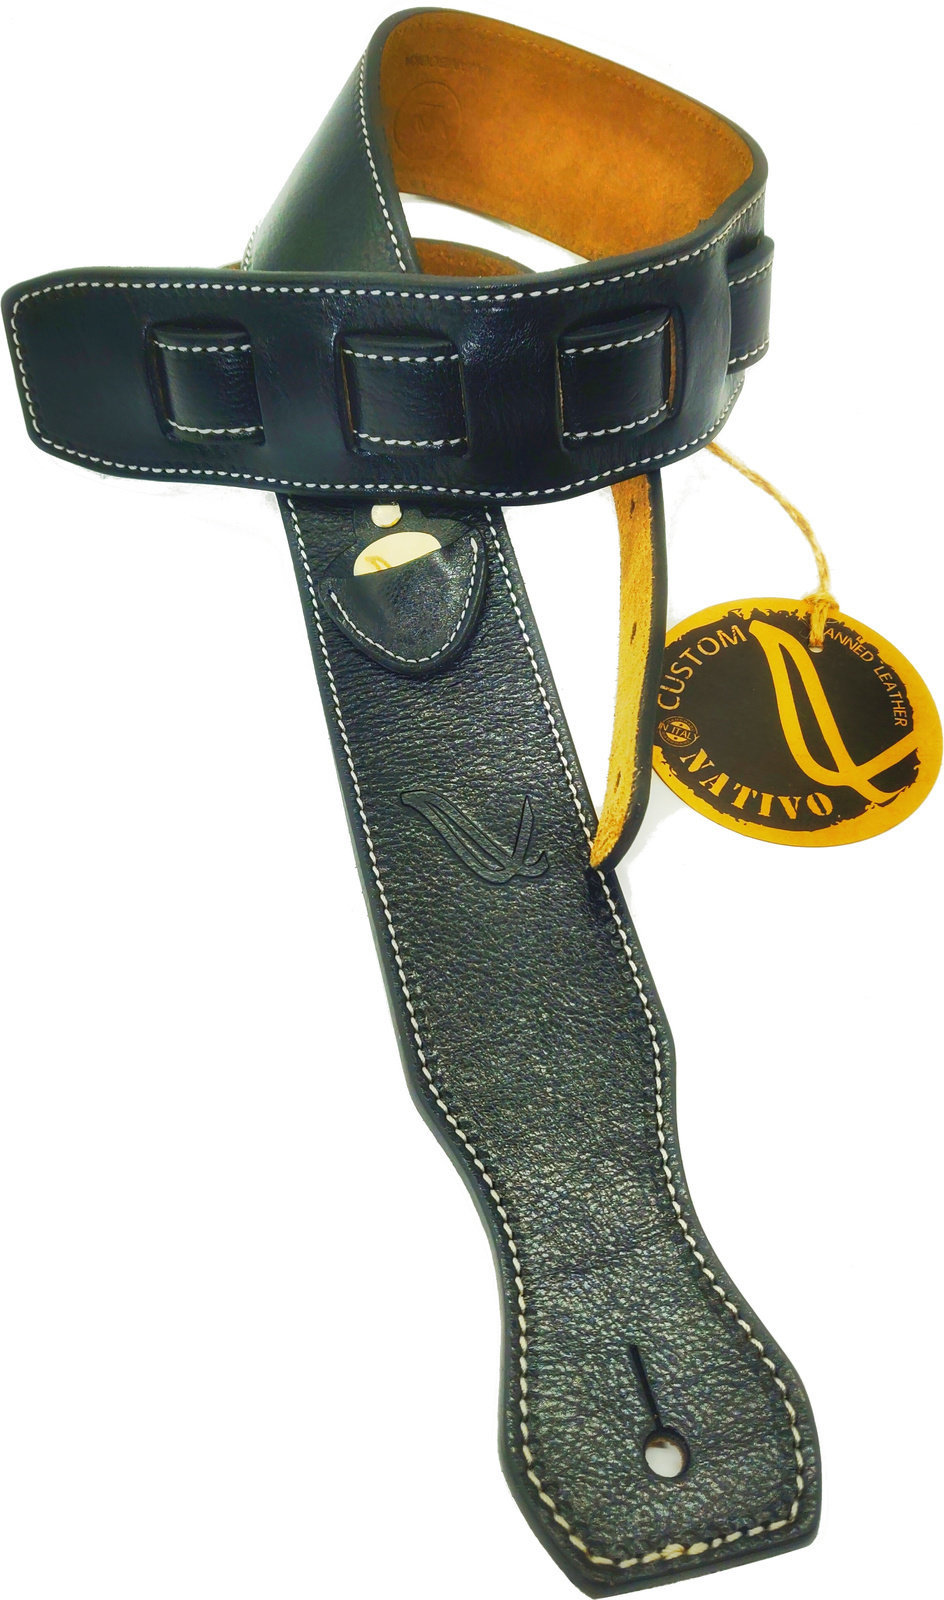 Leather guitar strap Wambooka Nativo Custom Leather guitar strap Black